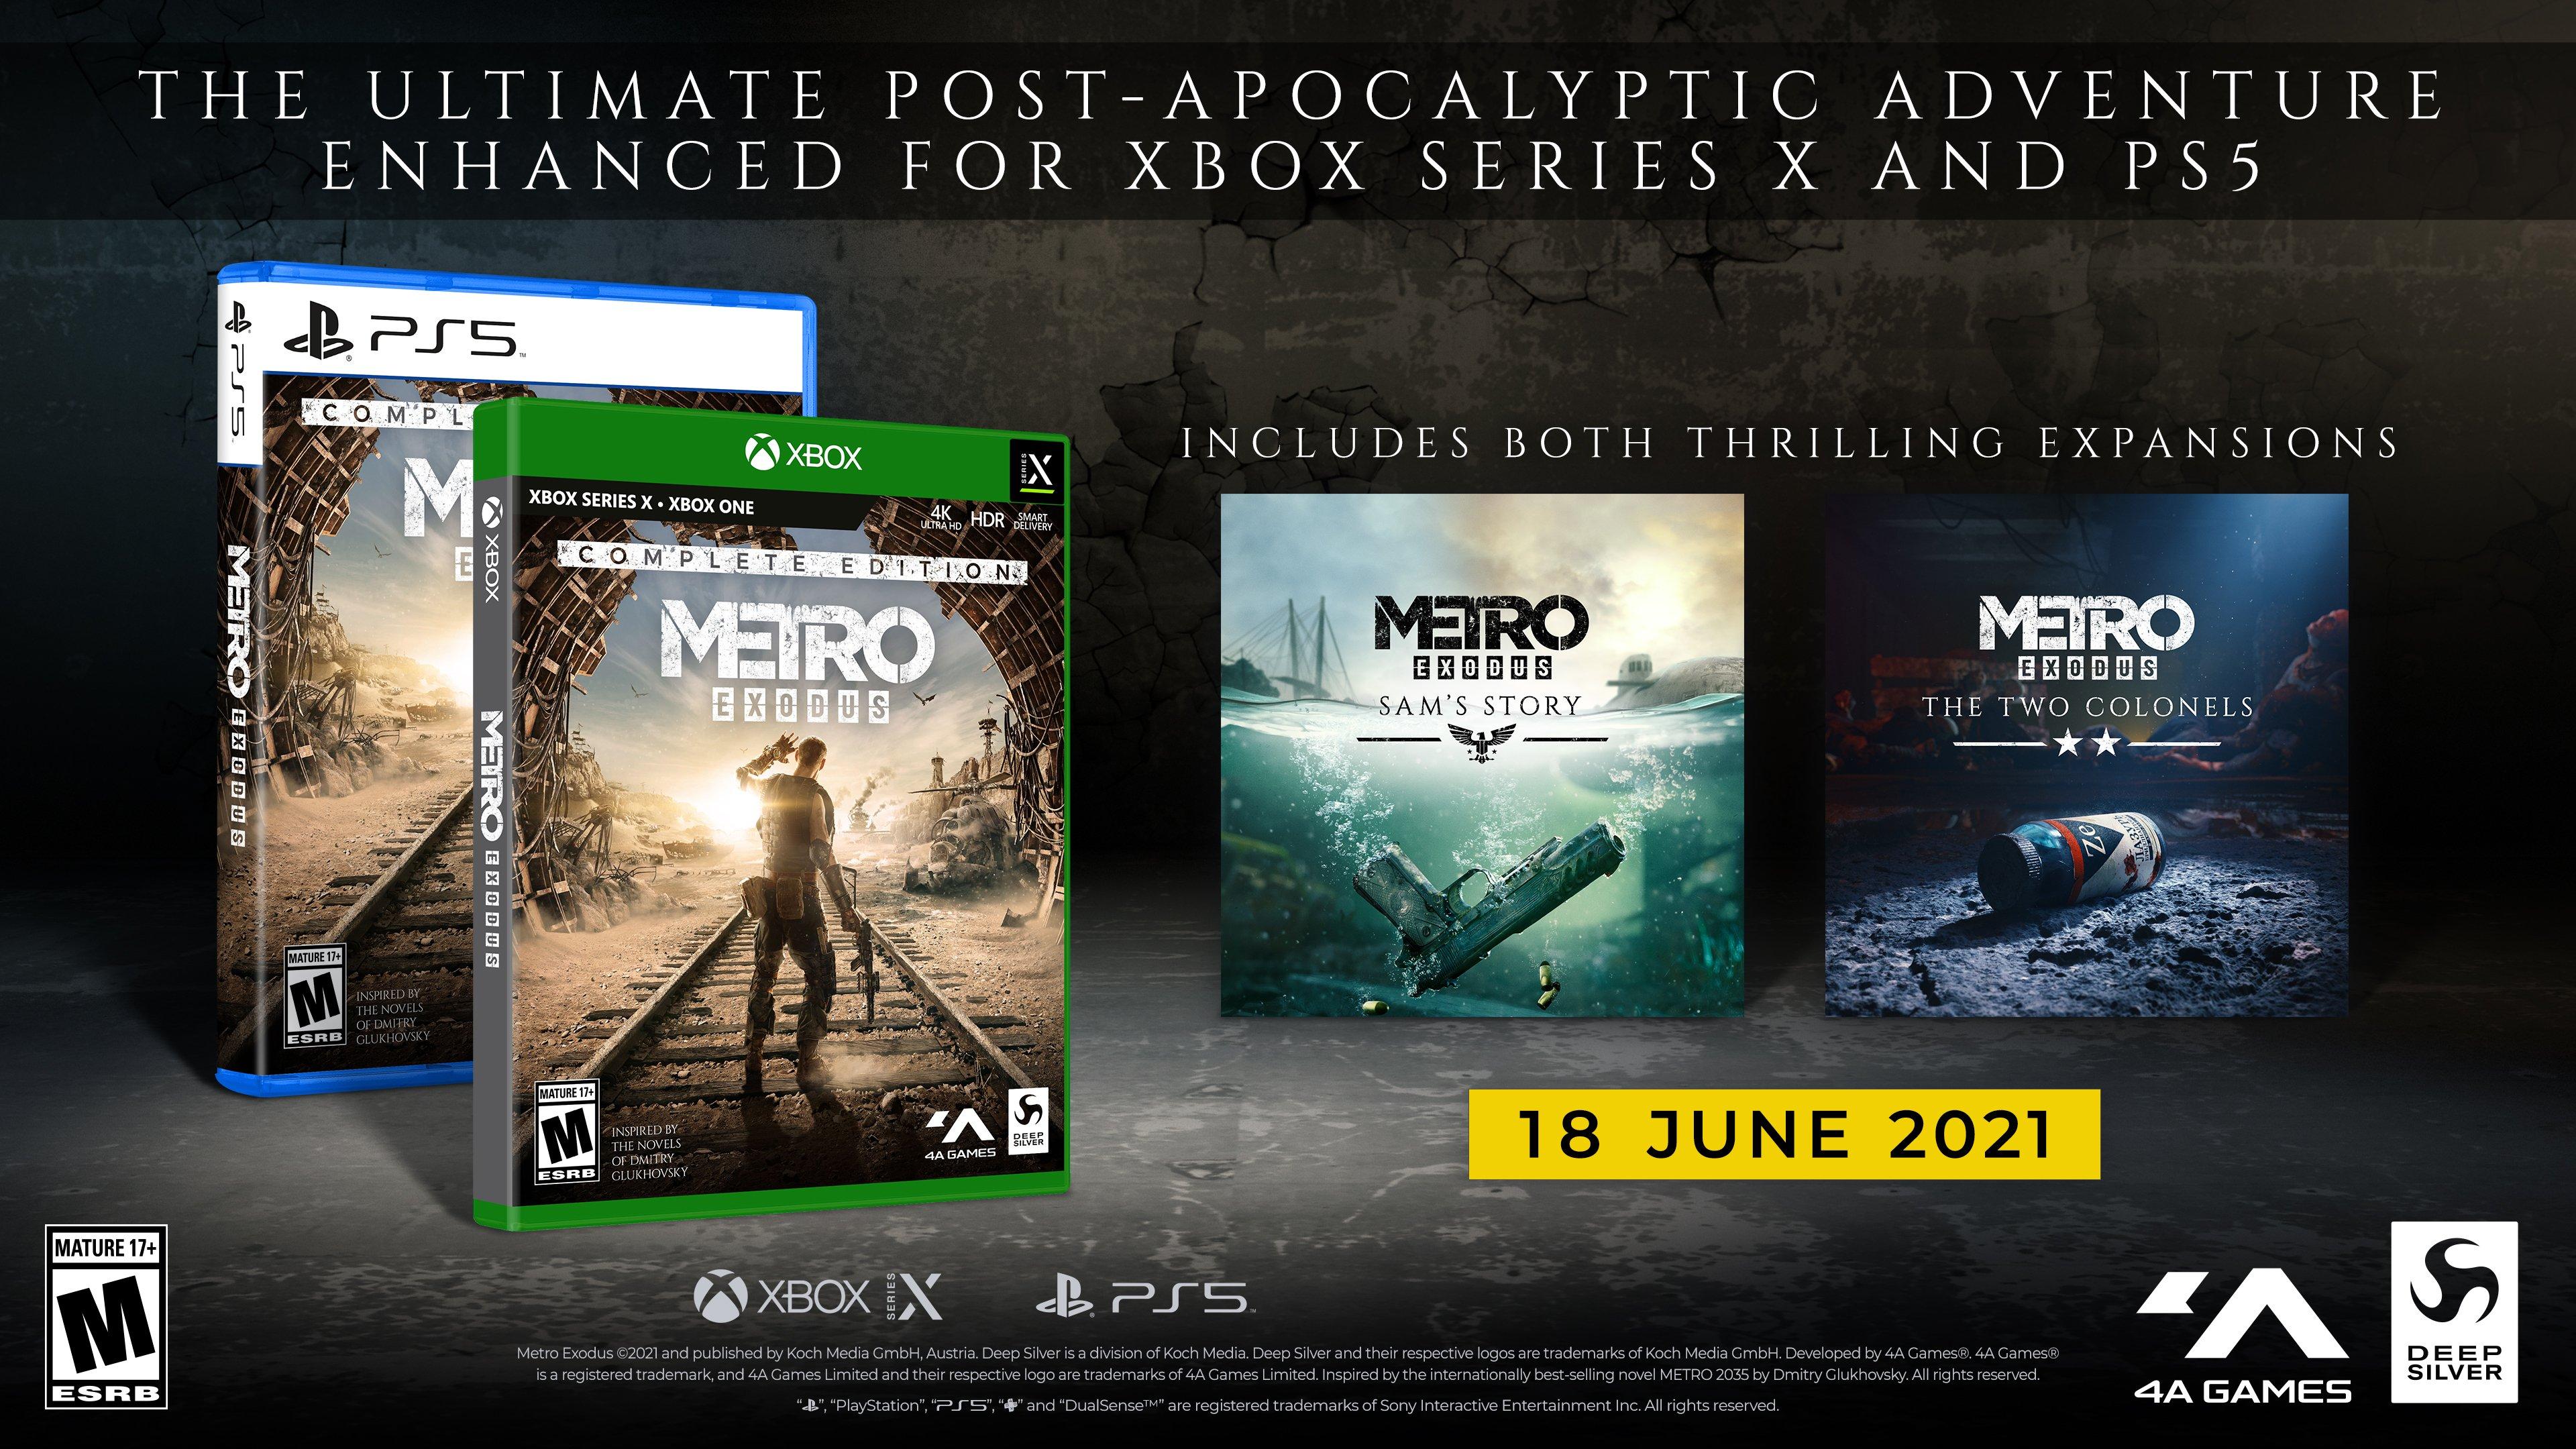 Jogo Metro Exodus: Complete Edition - Xbox Series X